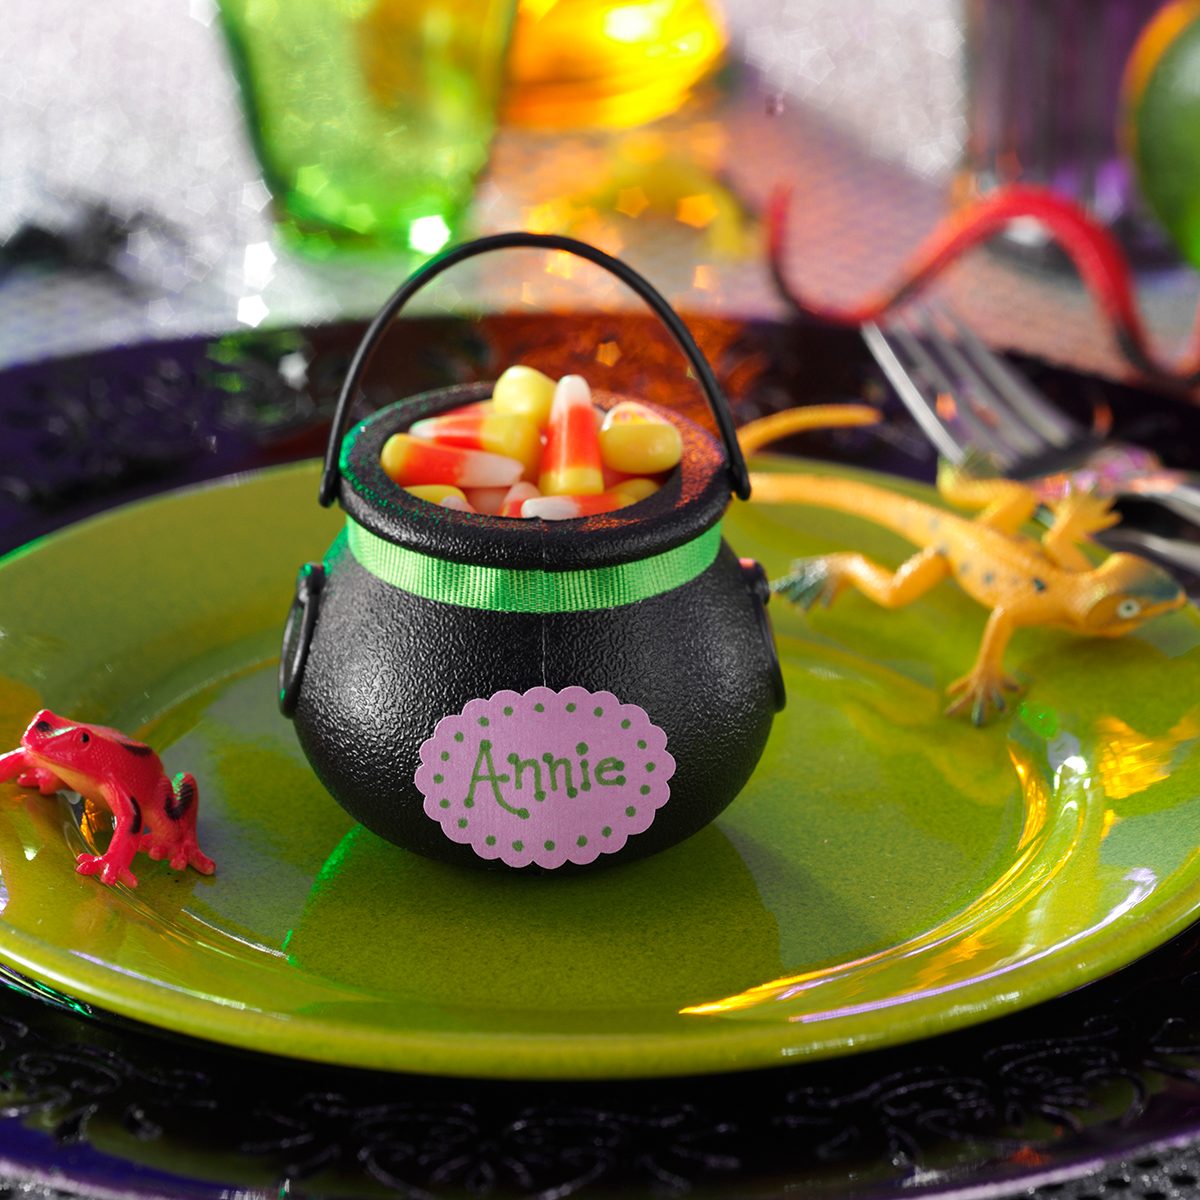 Candy cauldron decoration for Halloween